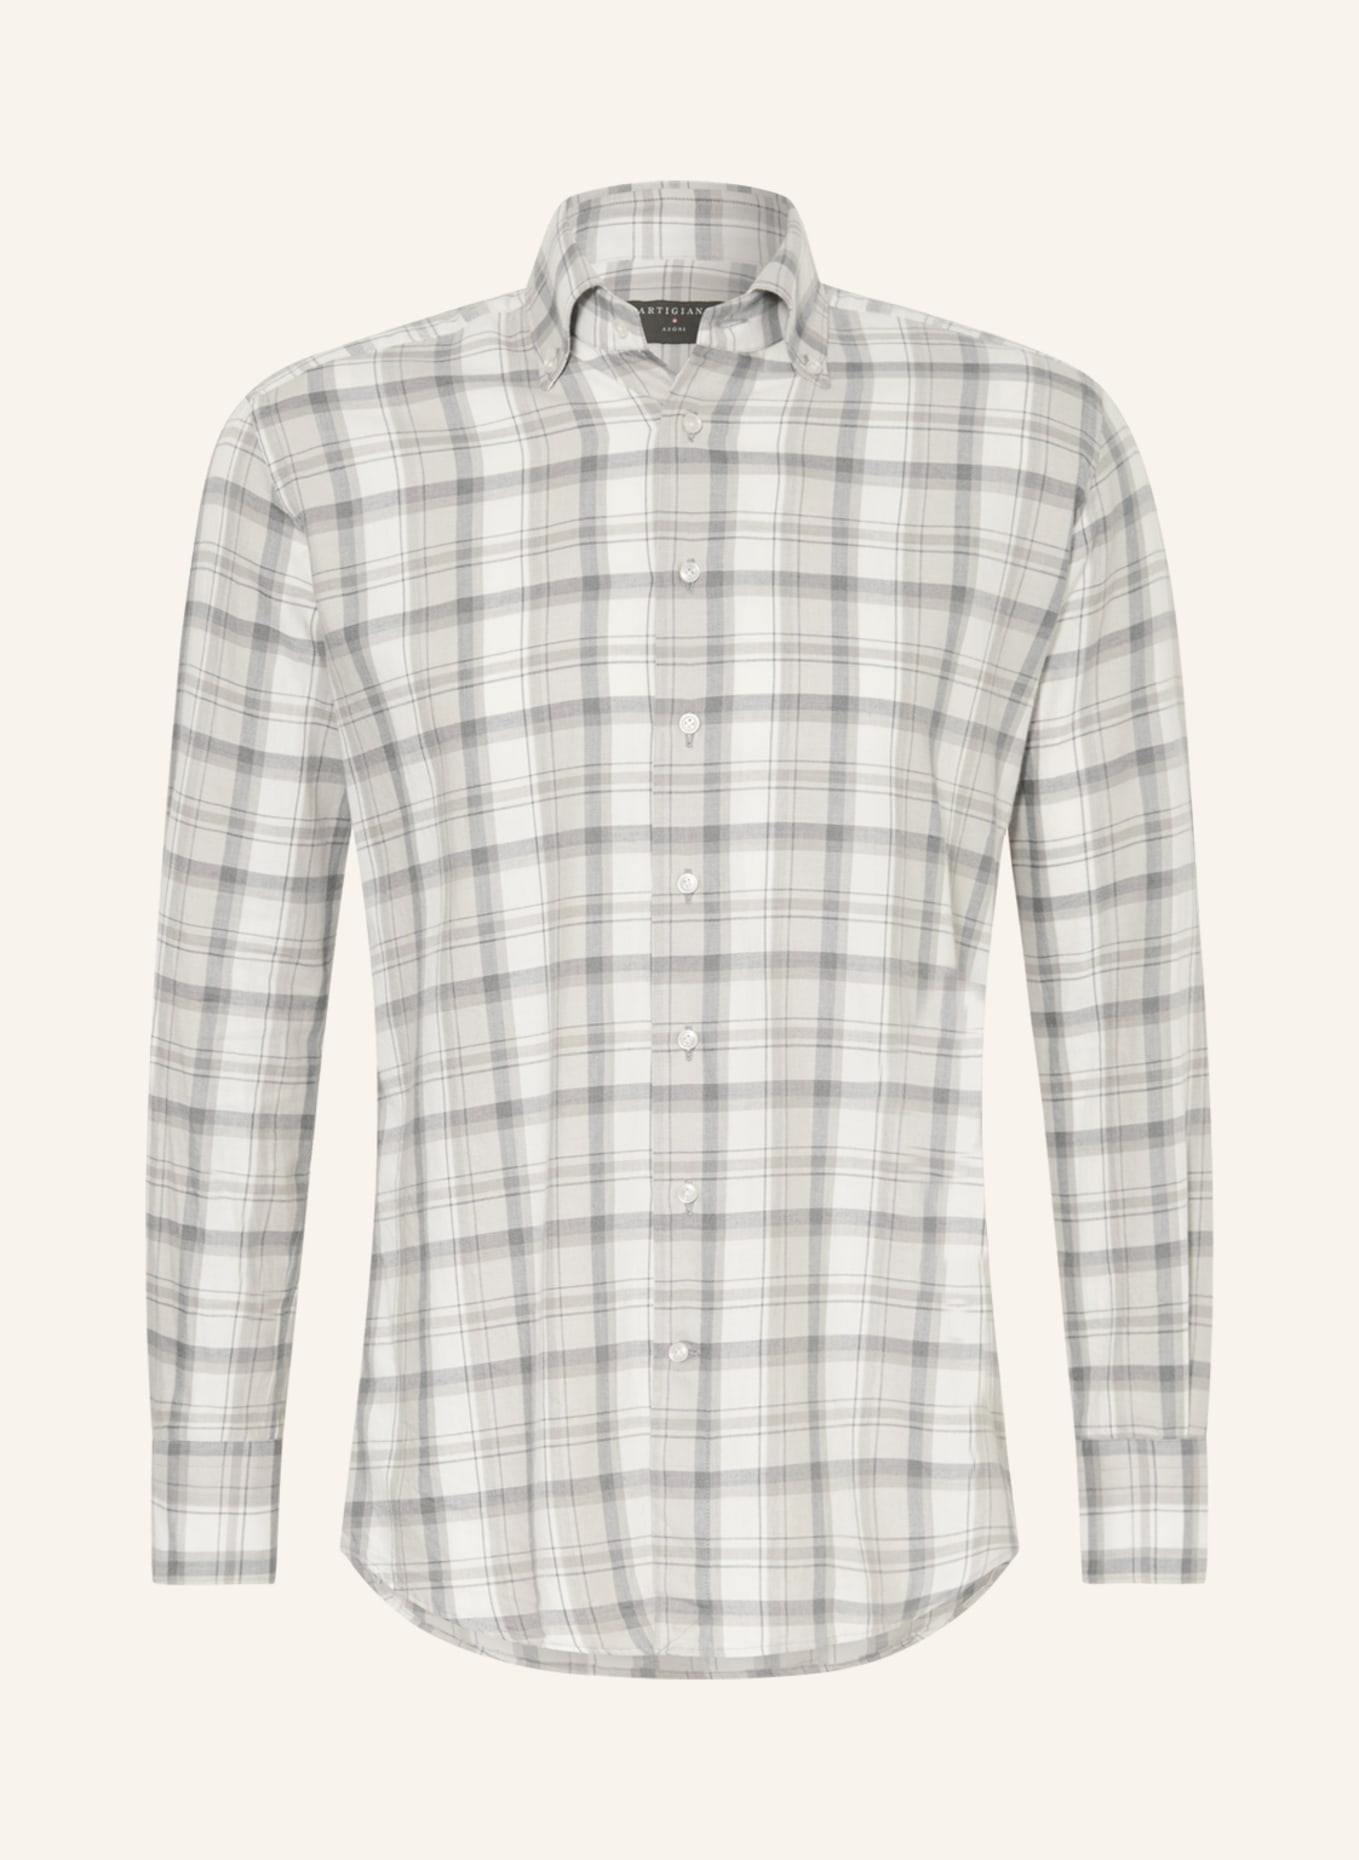 ARTIGIANO Flannel shirt classic fit, Color: WHITE/ LIGHT GRAY/ GRAY (Image 1)